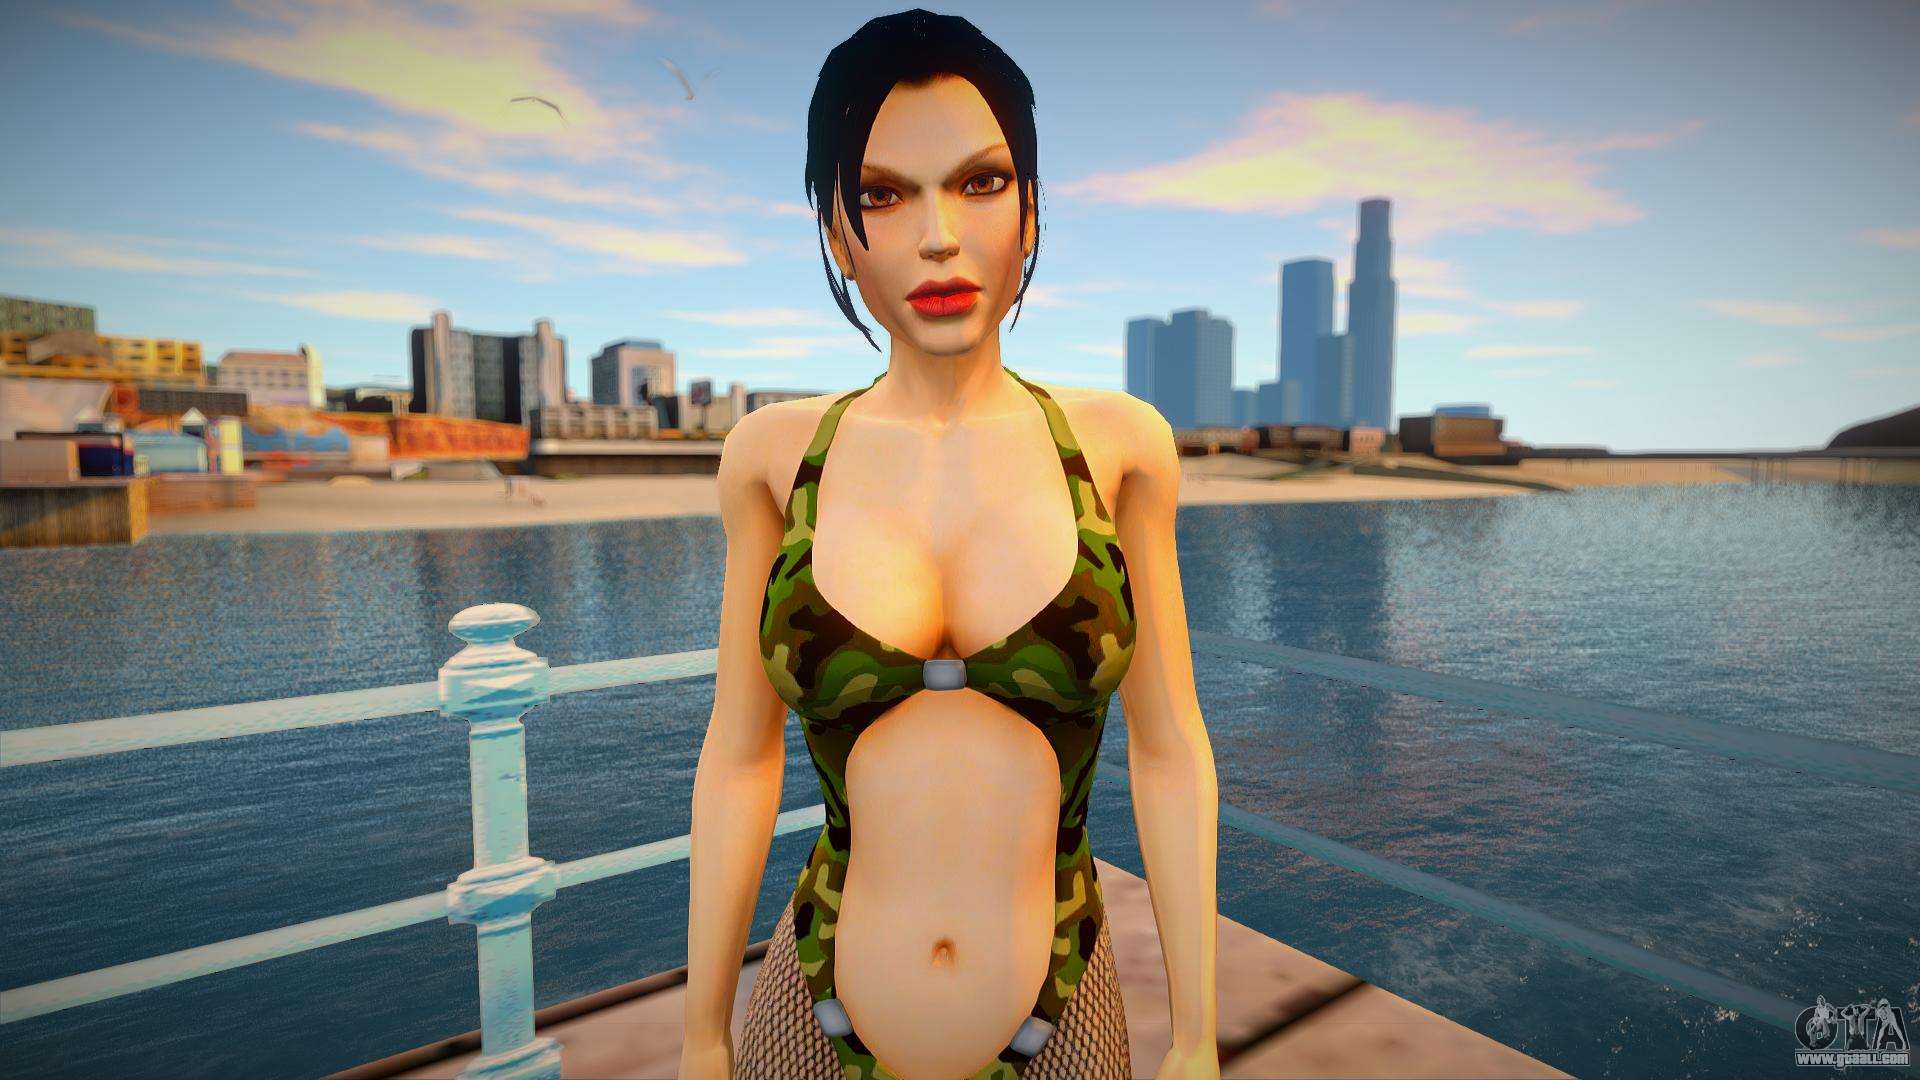 Lara croft bikini comics